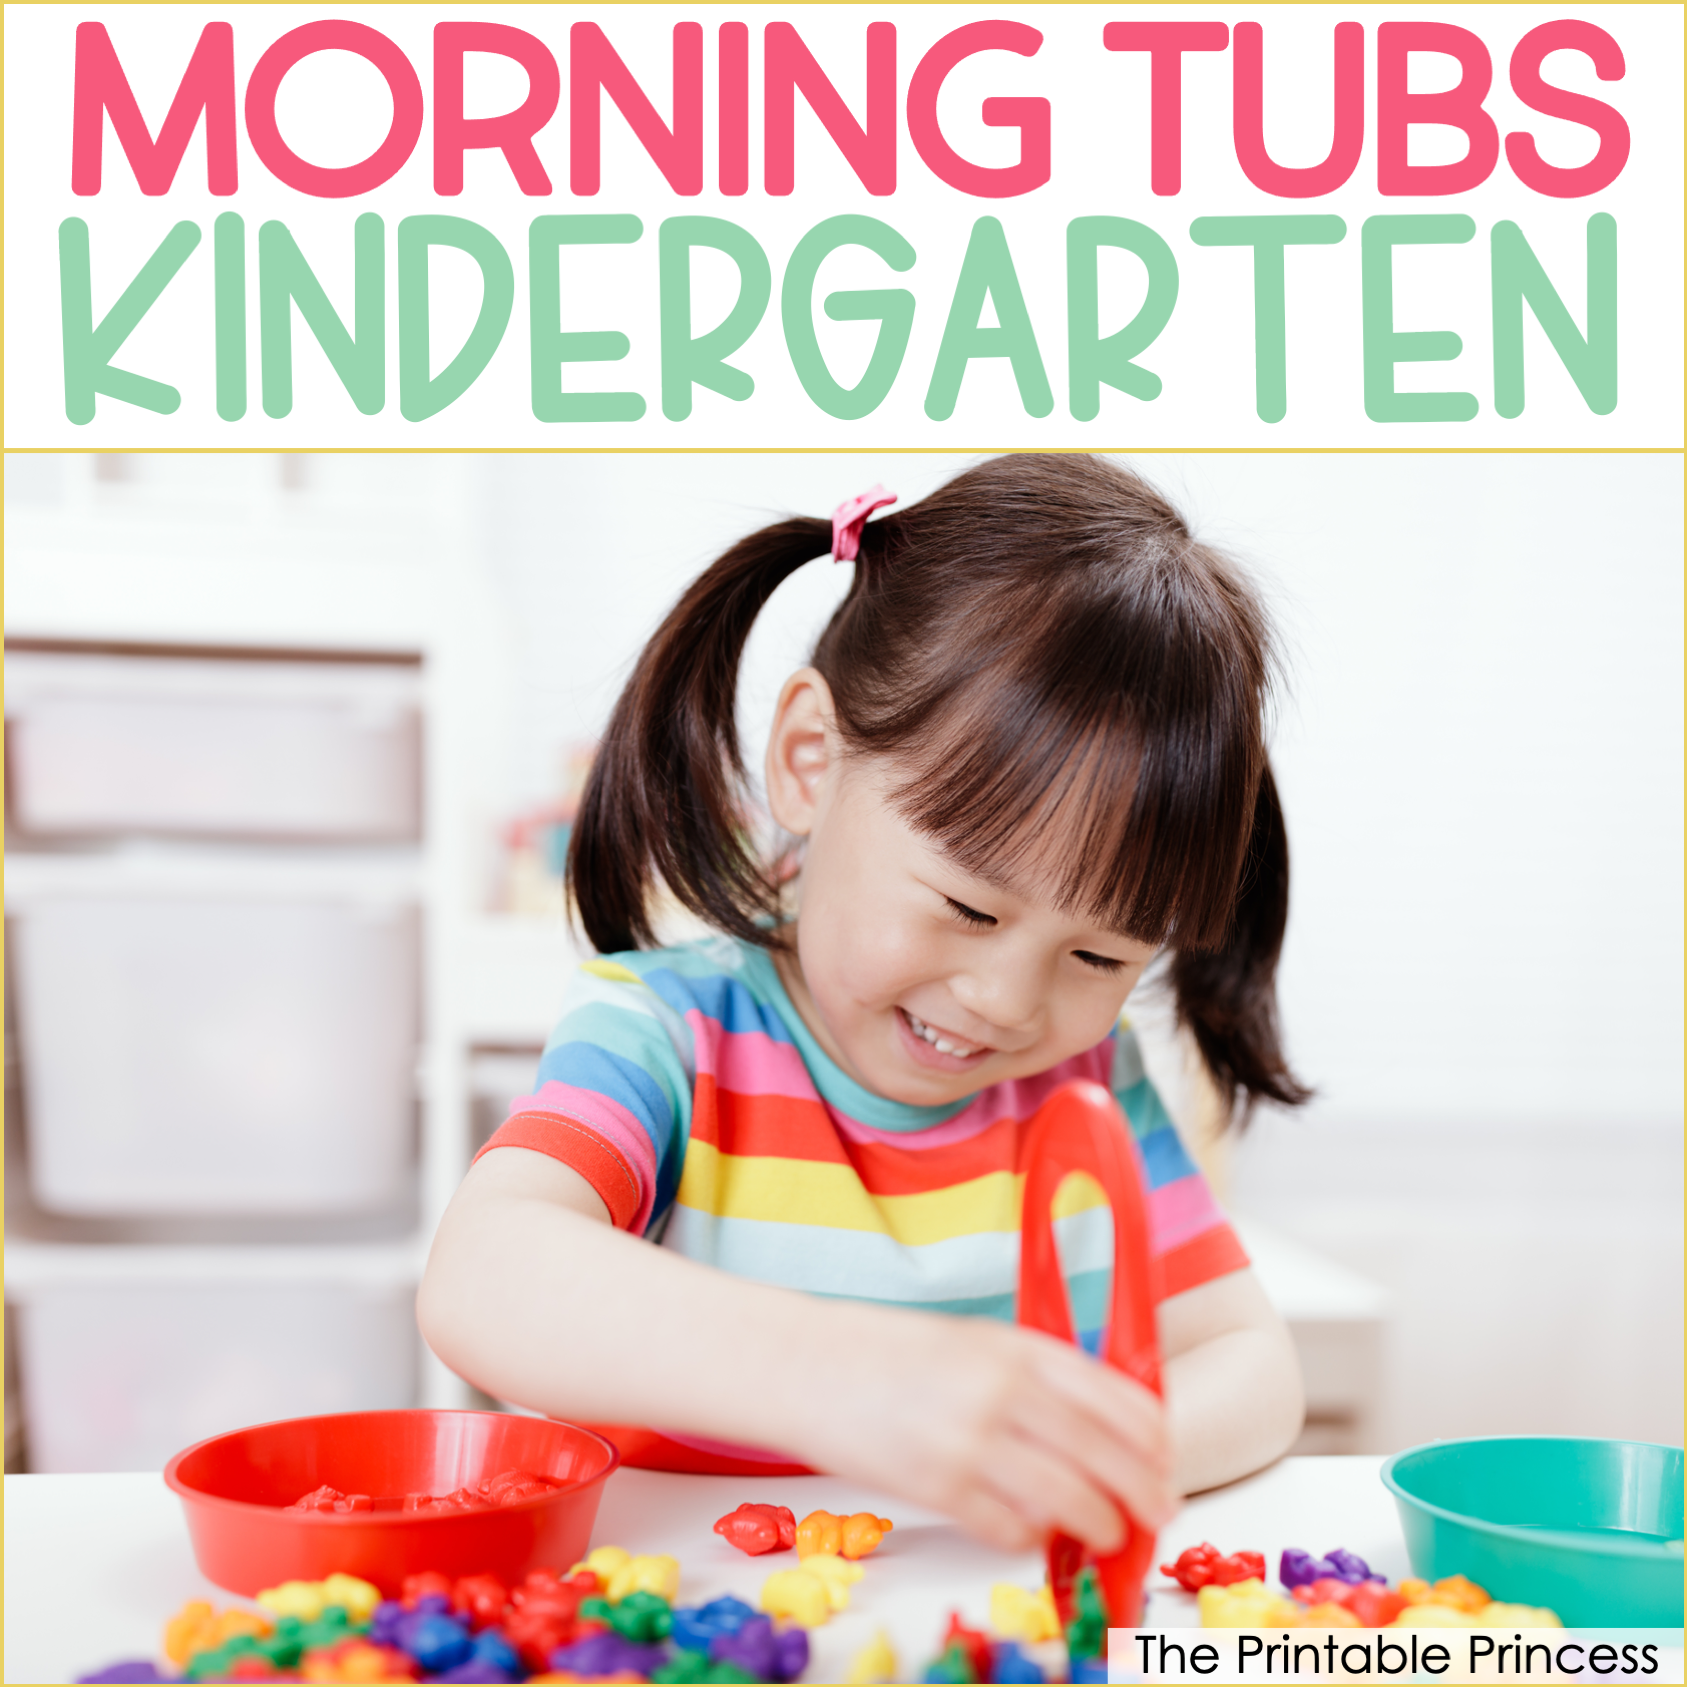 Morning Tub Ideas for Kindergarten